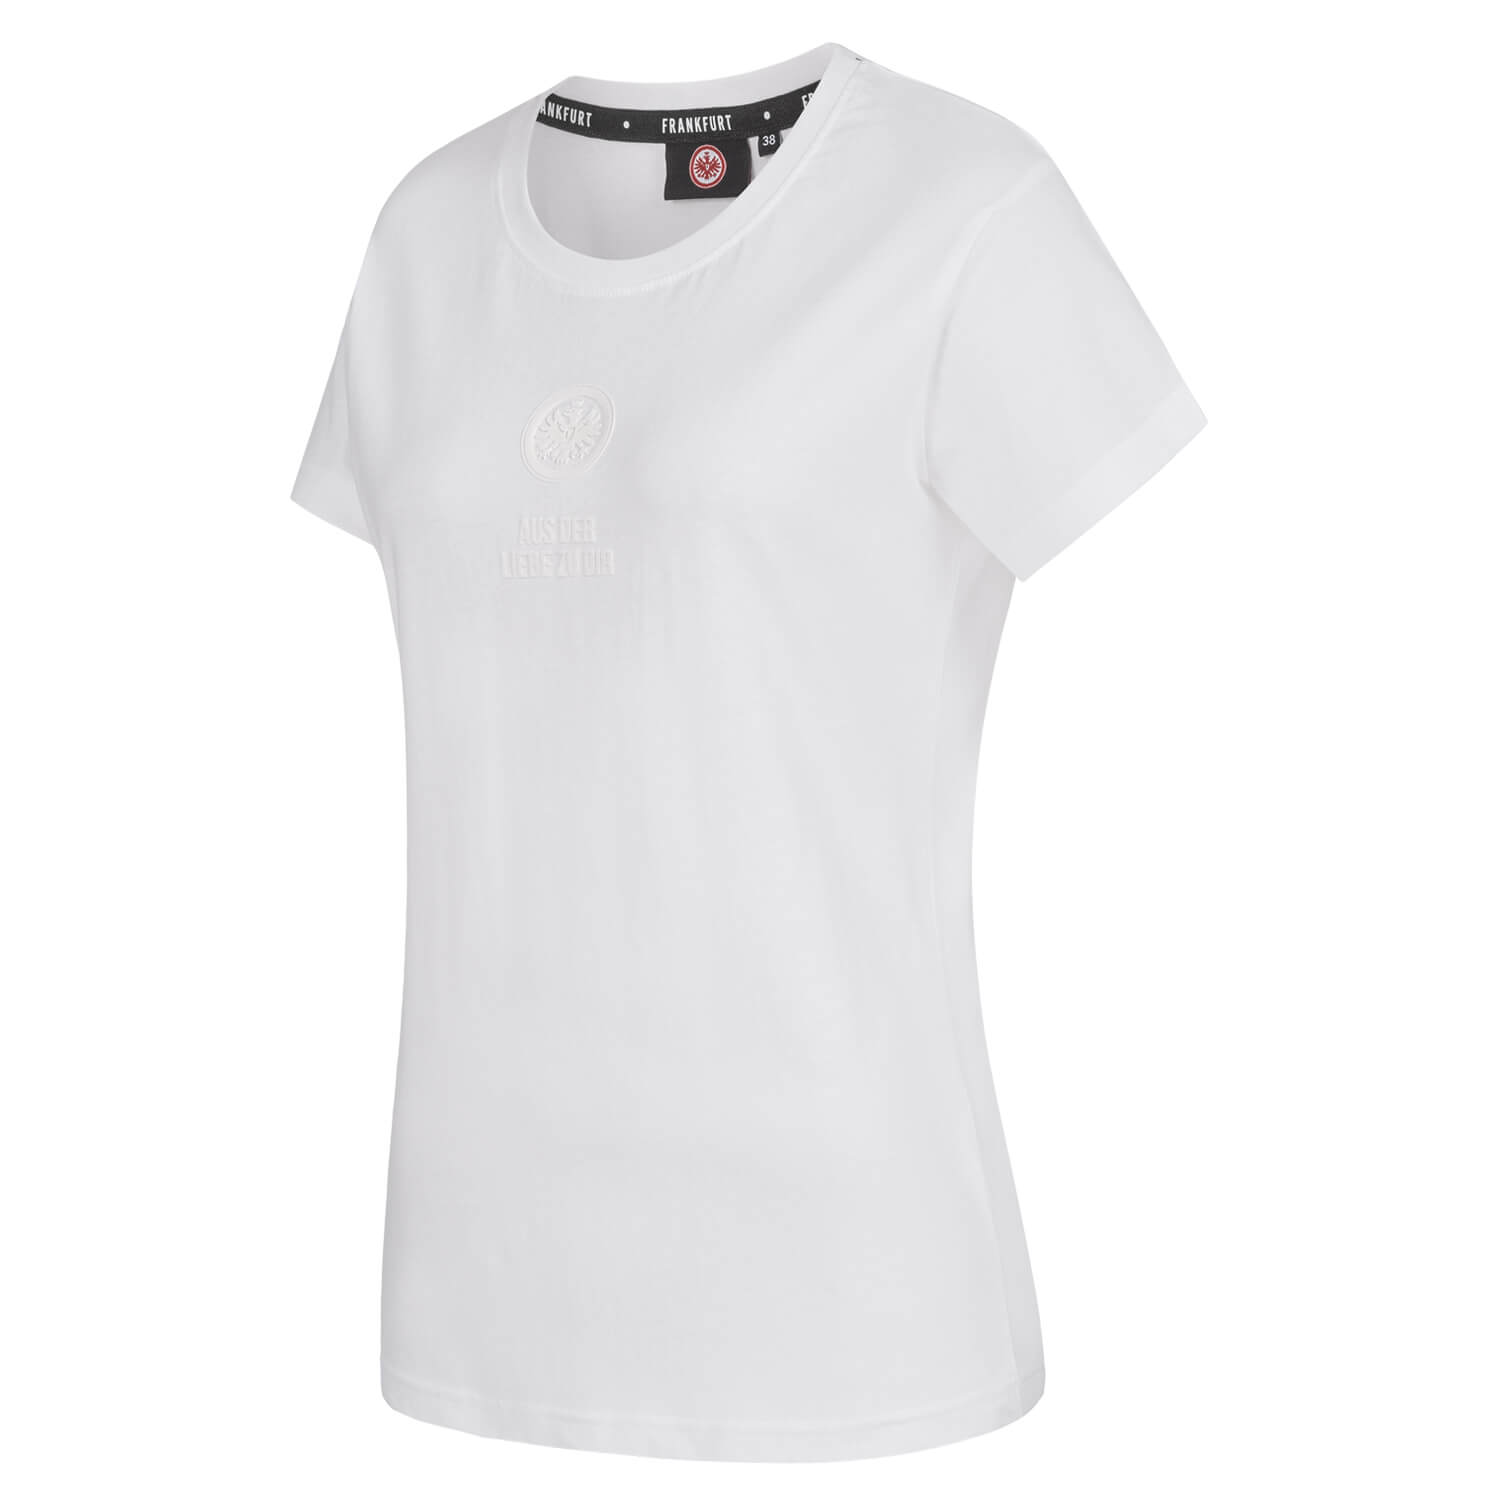 Bild 3: Damen T-Shirt White Badge